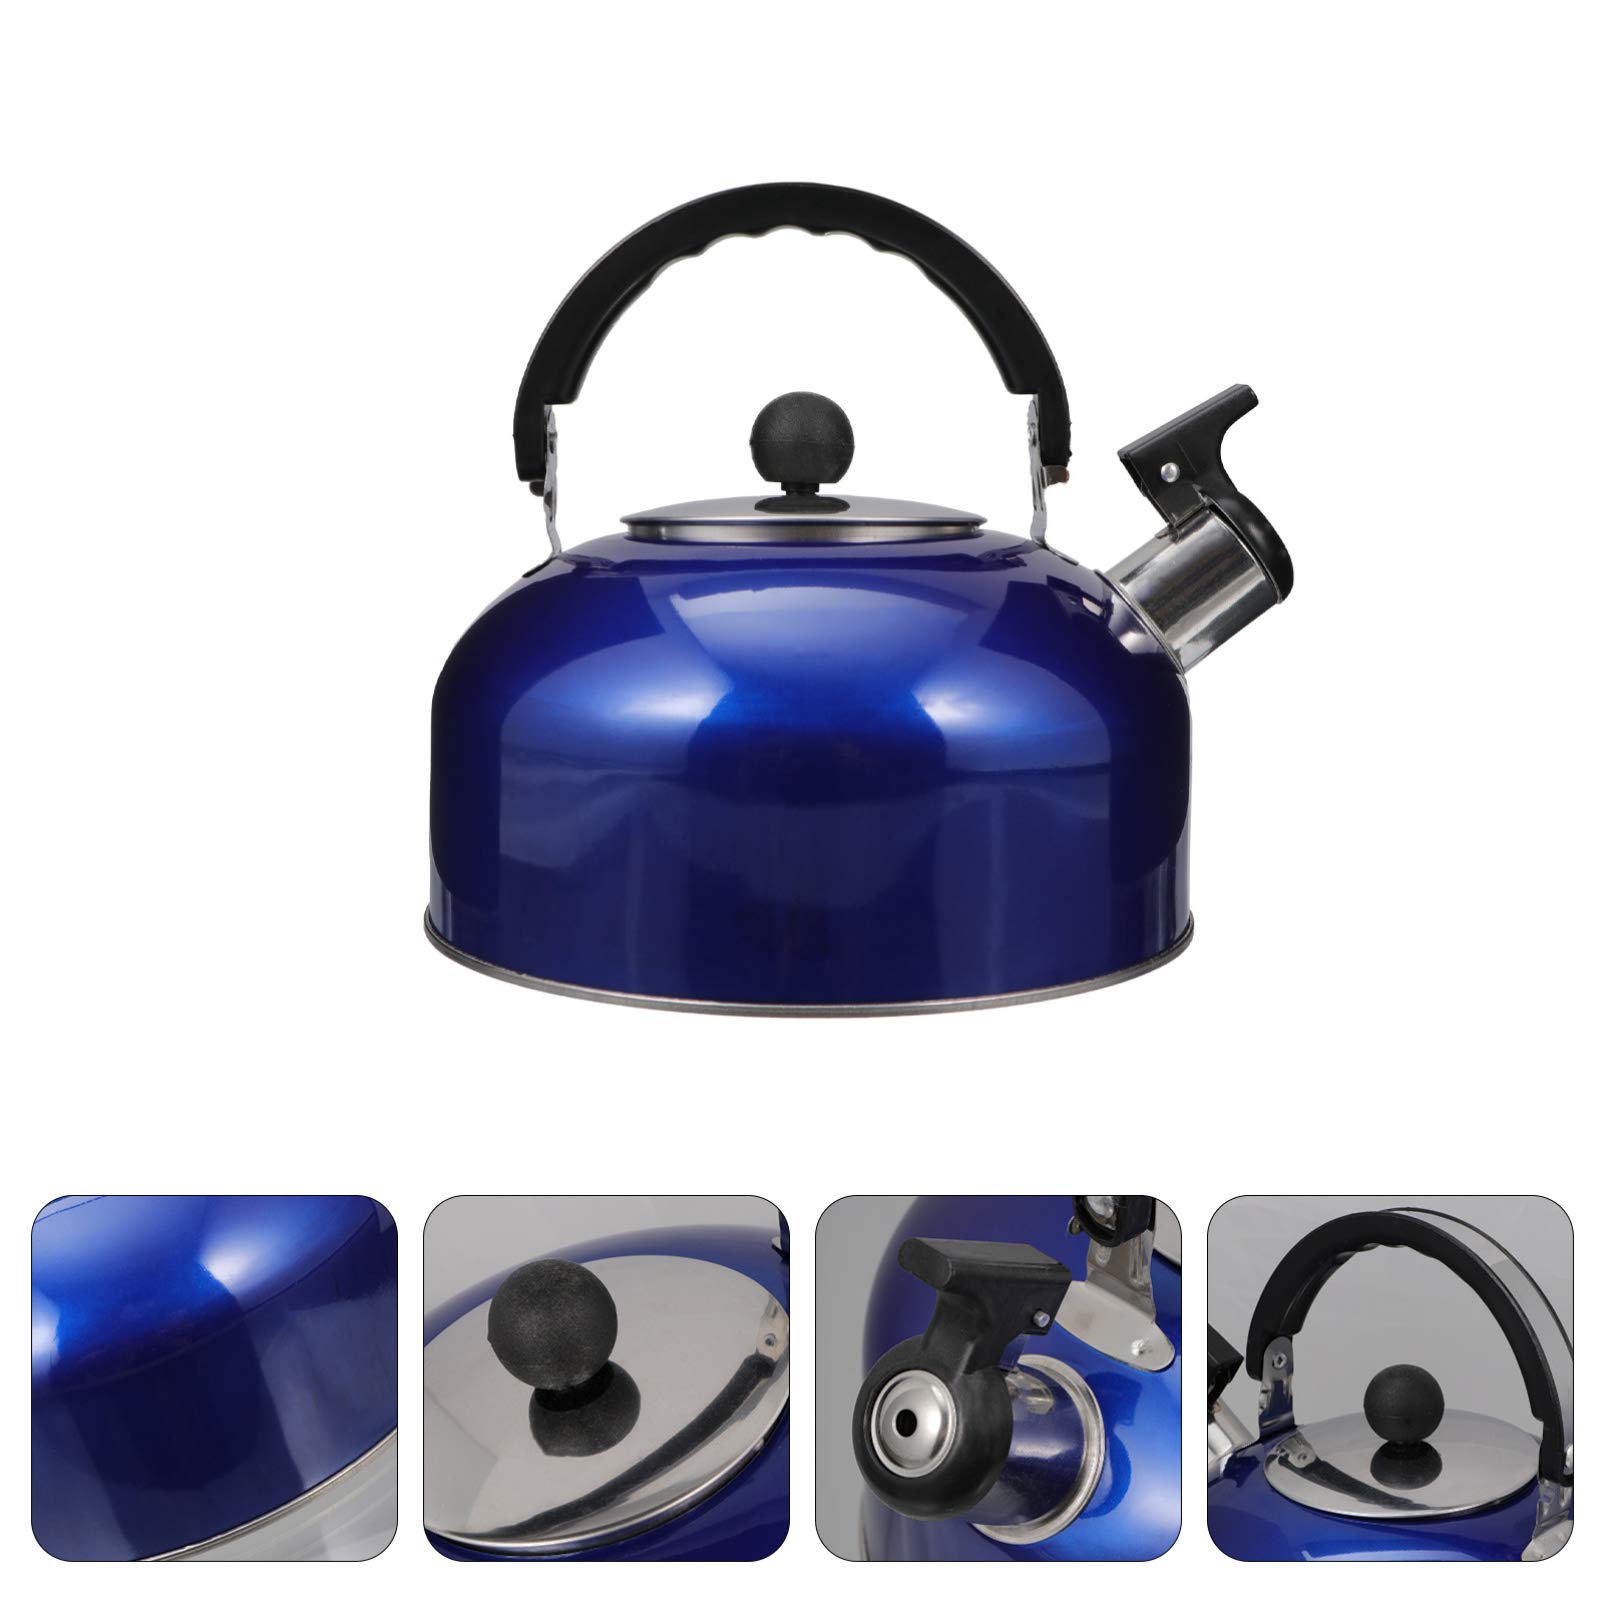 Housoutil Blue mirror Stove Top Tea kettle, Stovetop Whistling Tea Pot,Food Grade Stove Tea Pot with Heat Resistance Handle, Anti-Rust and Loud Whistling, Stainless Steel Tea kettle for Stovetop